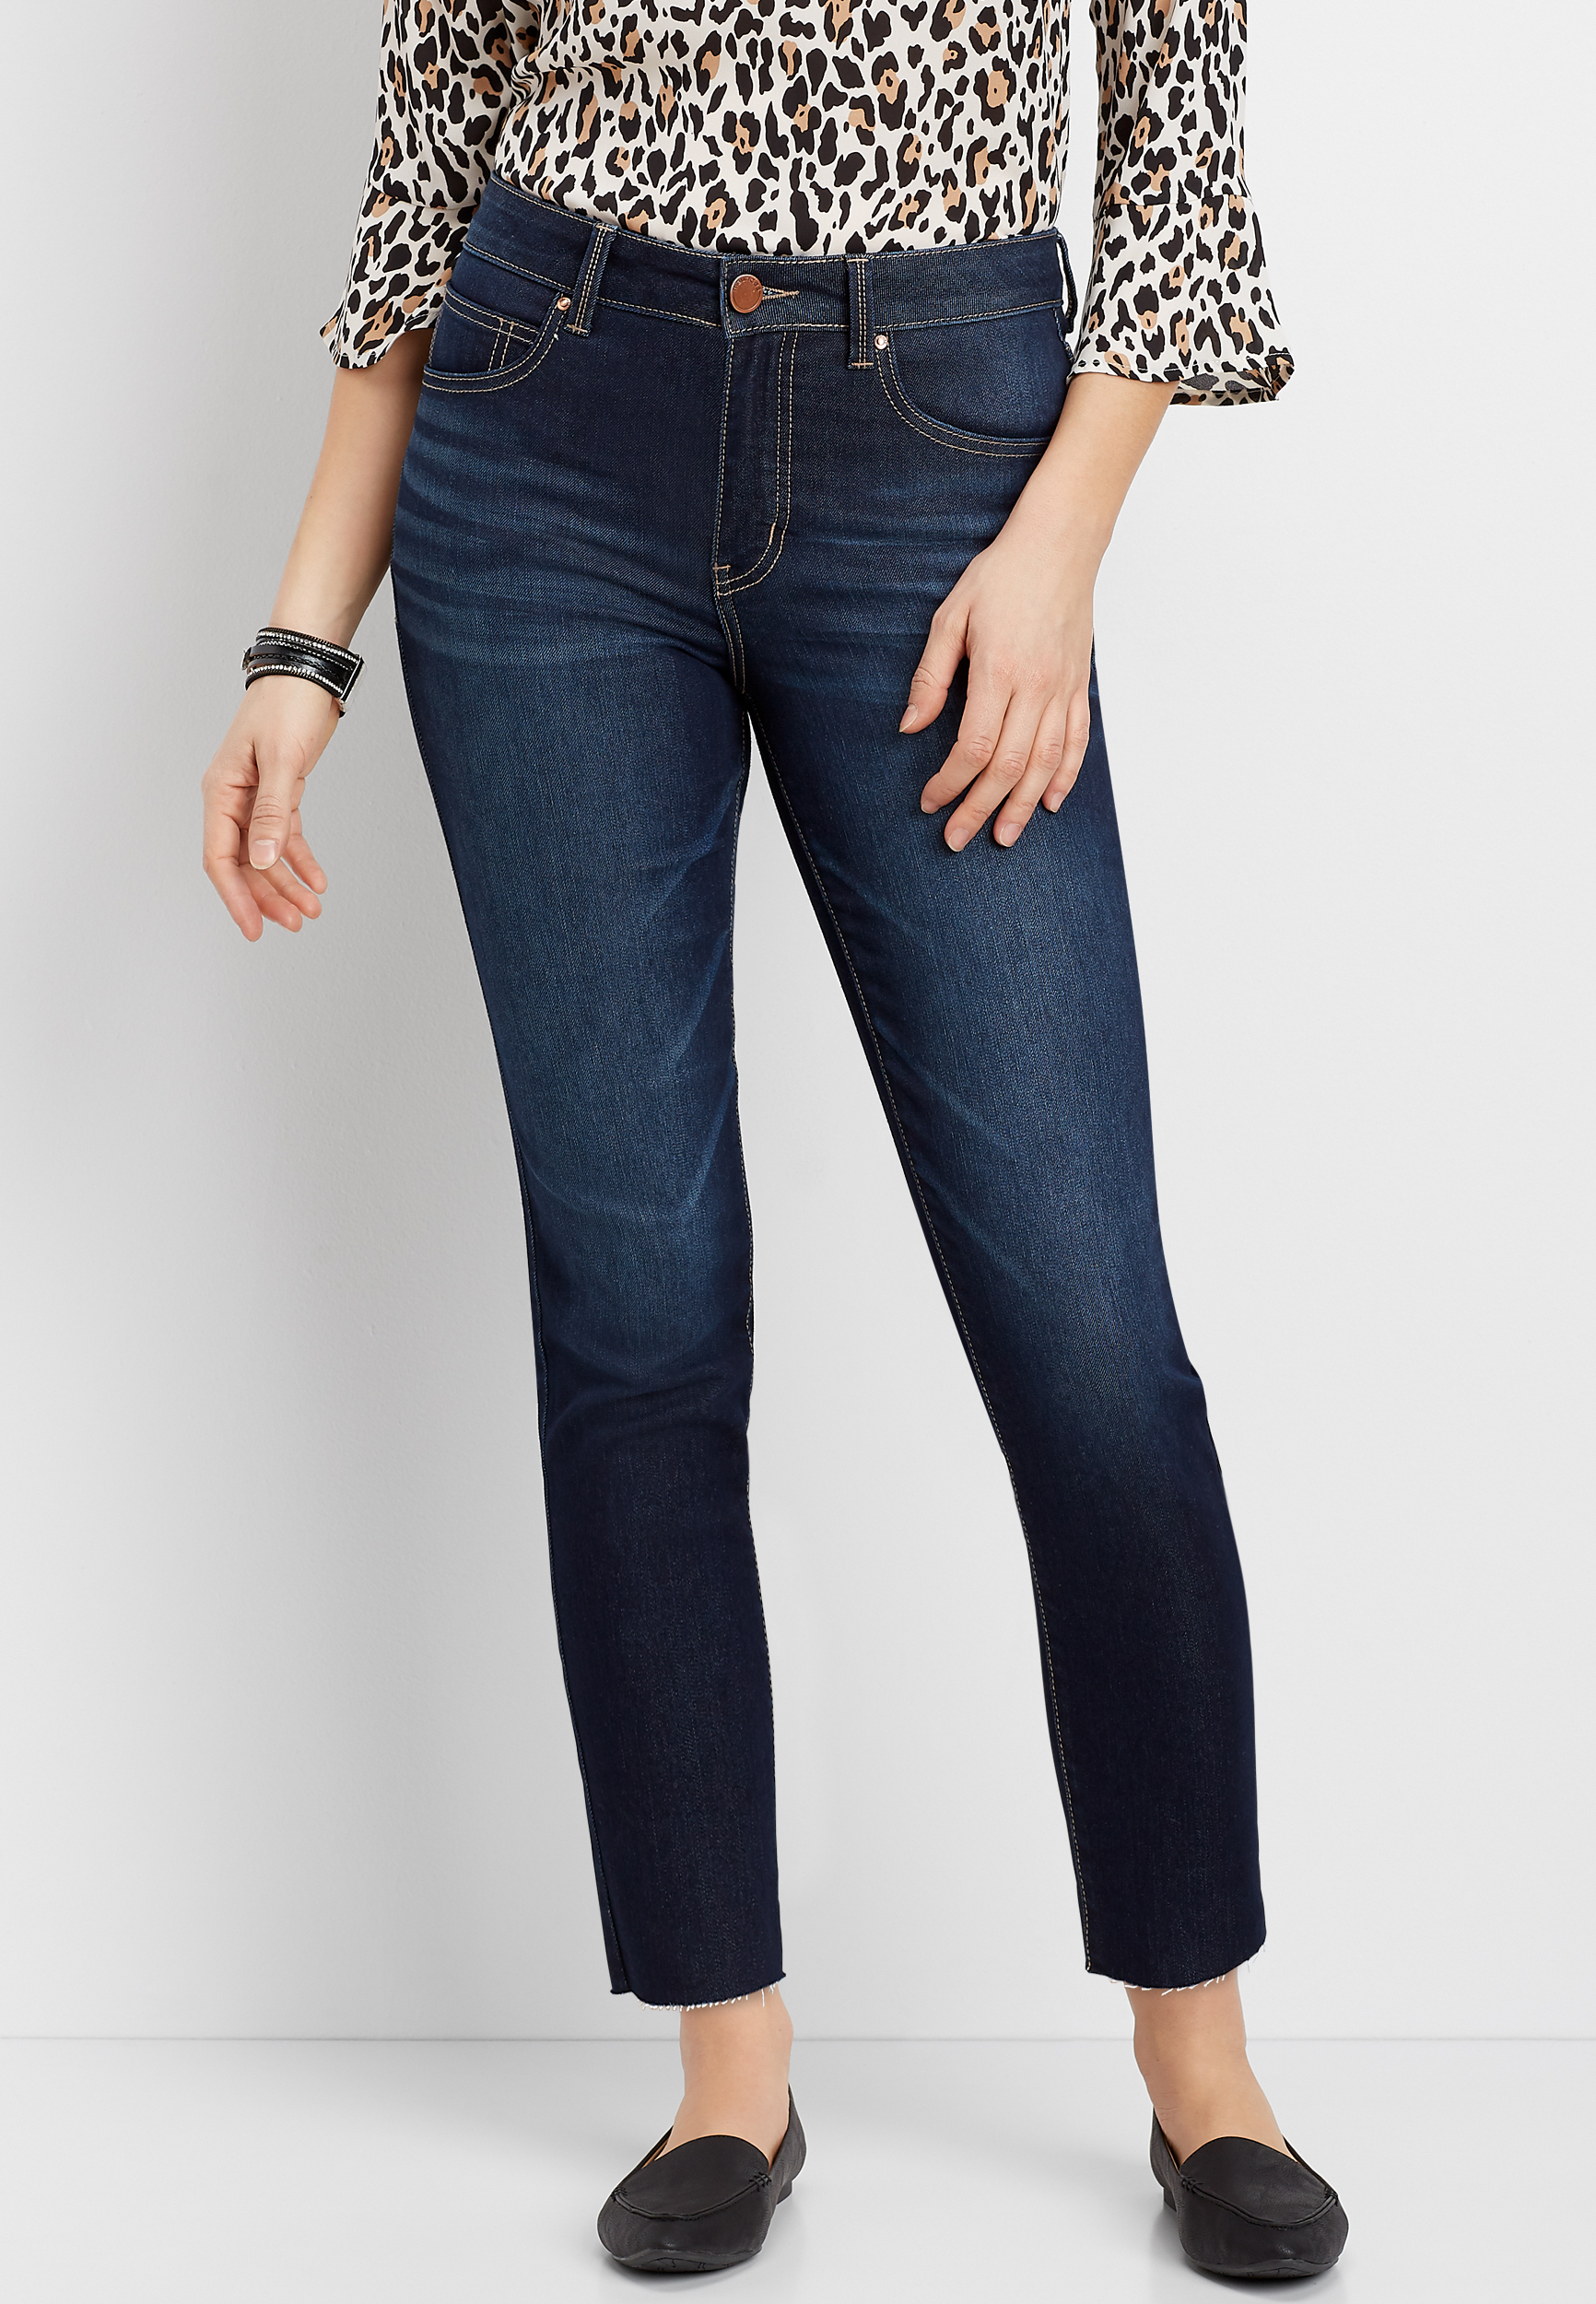 maurices everflex jeans